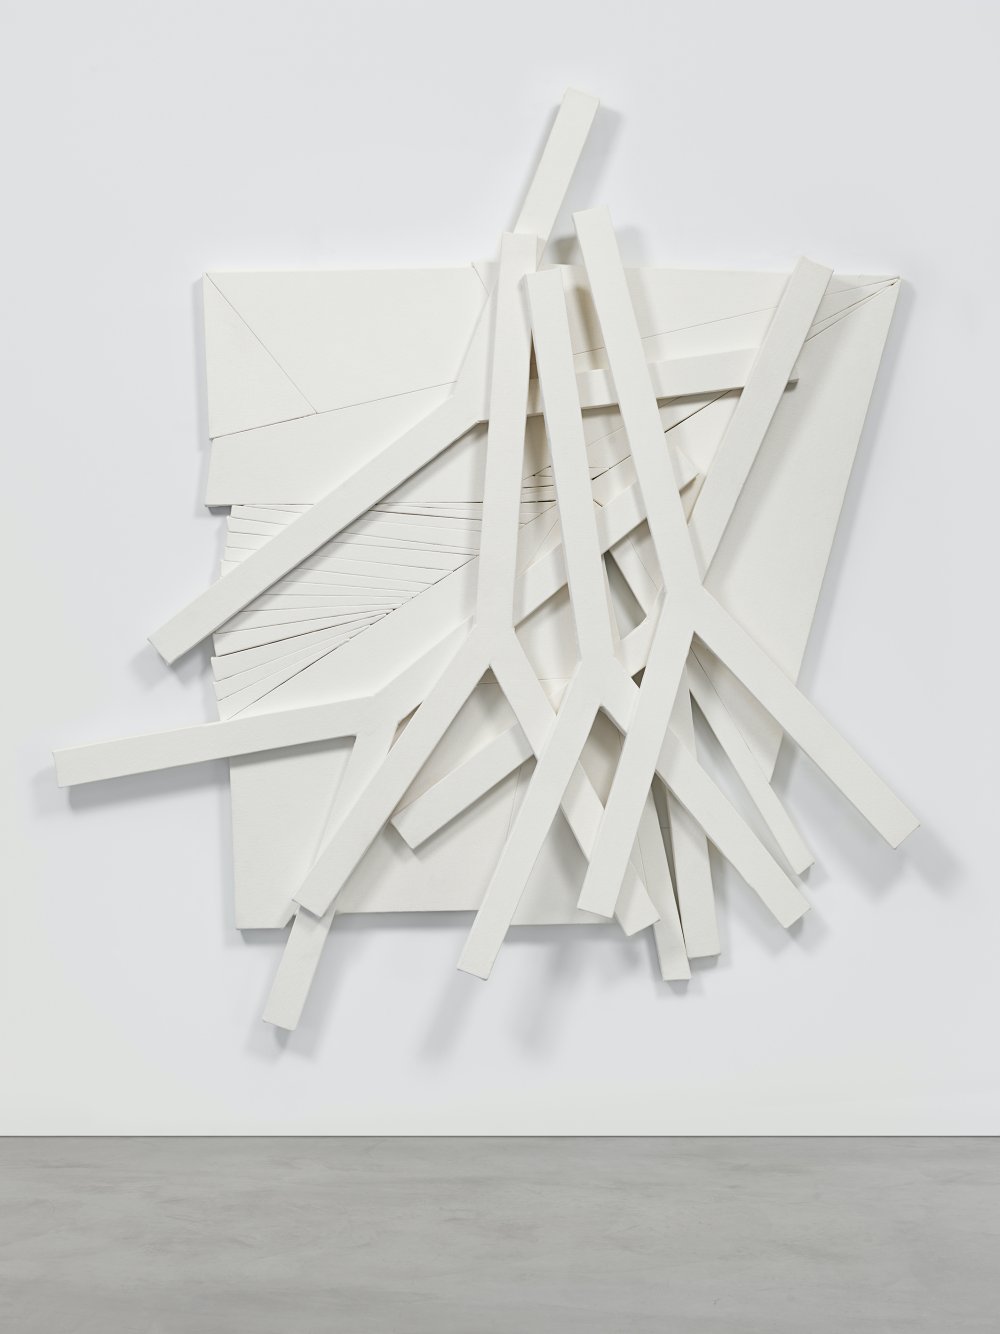 Wyatt Kahn, Untitled, 2020